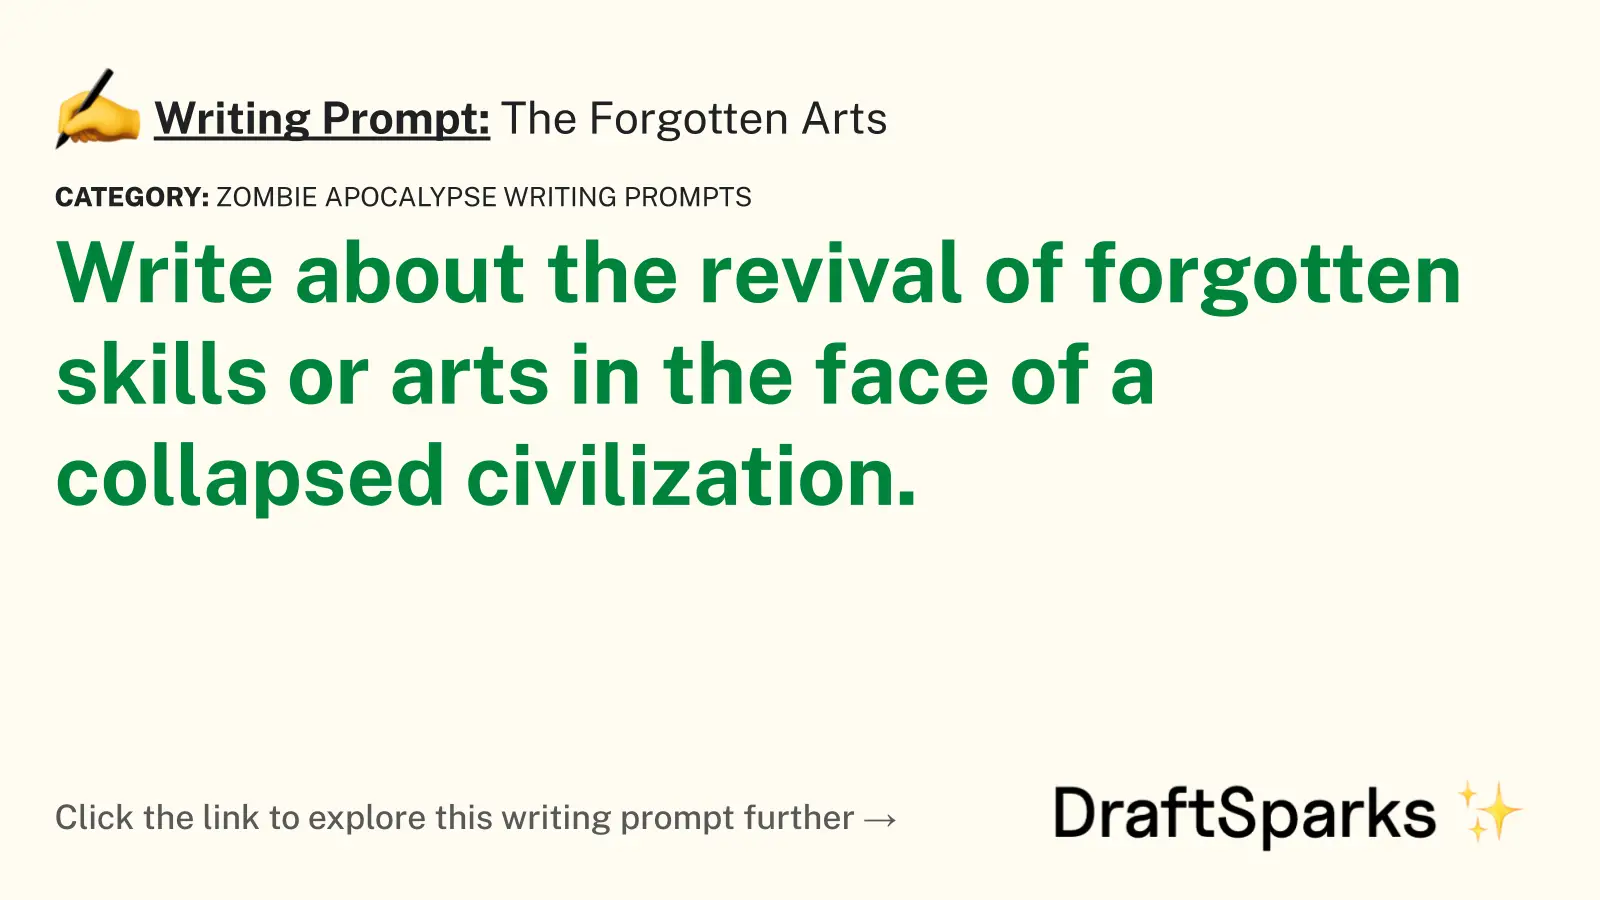 The Forgotten Arts